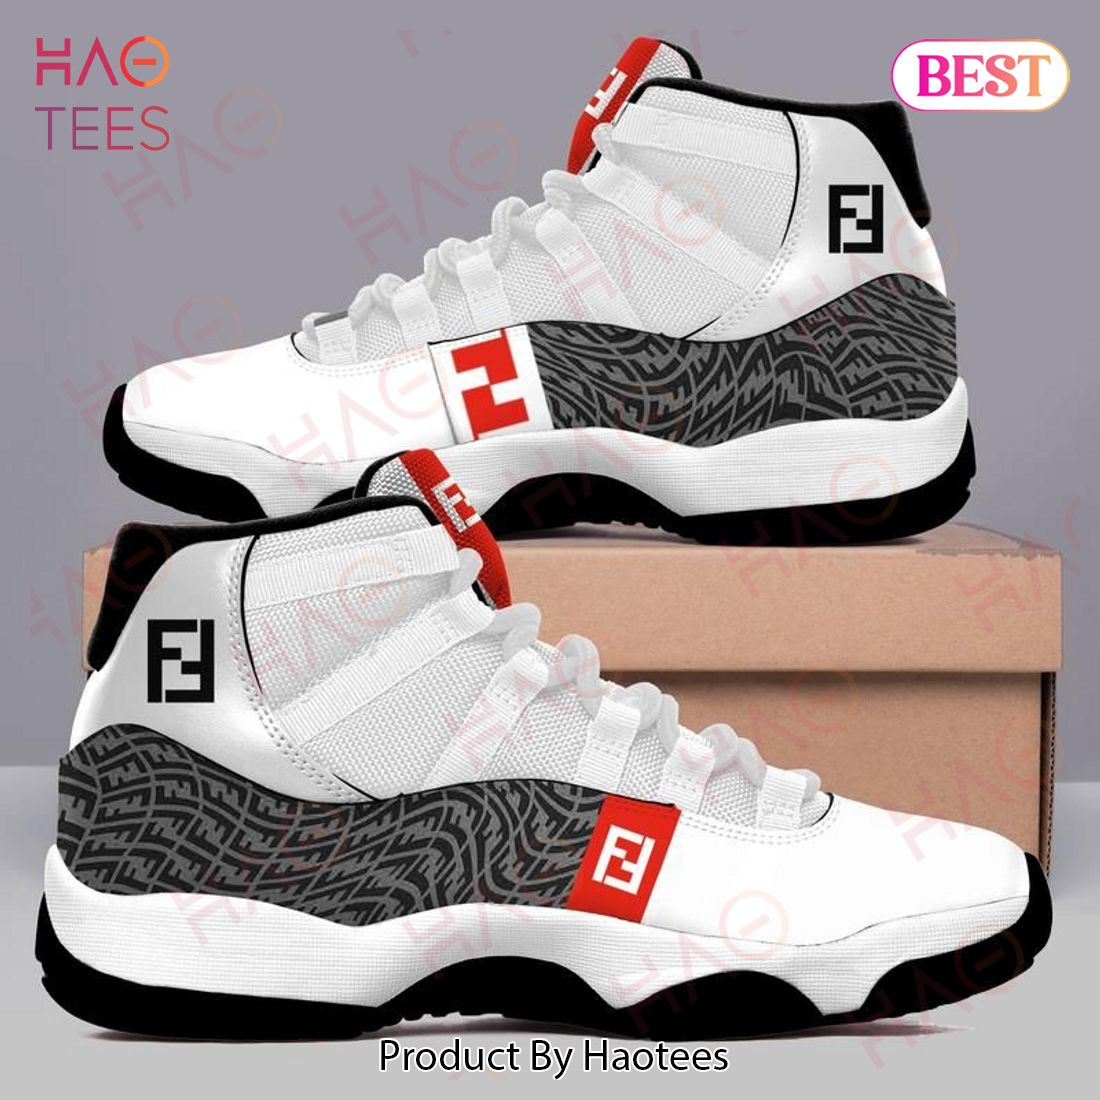 Fendi Vertigo Pattern Air Jordan 11 Sneakers Shoes Hot 2022 Gifts For Men Women